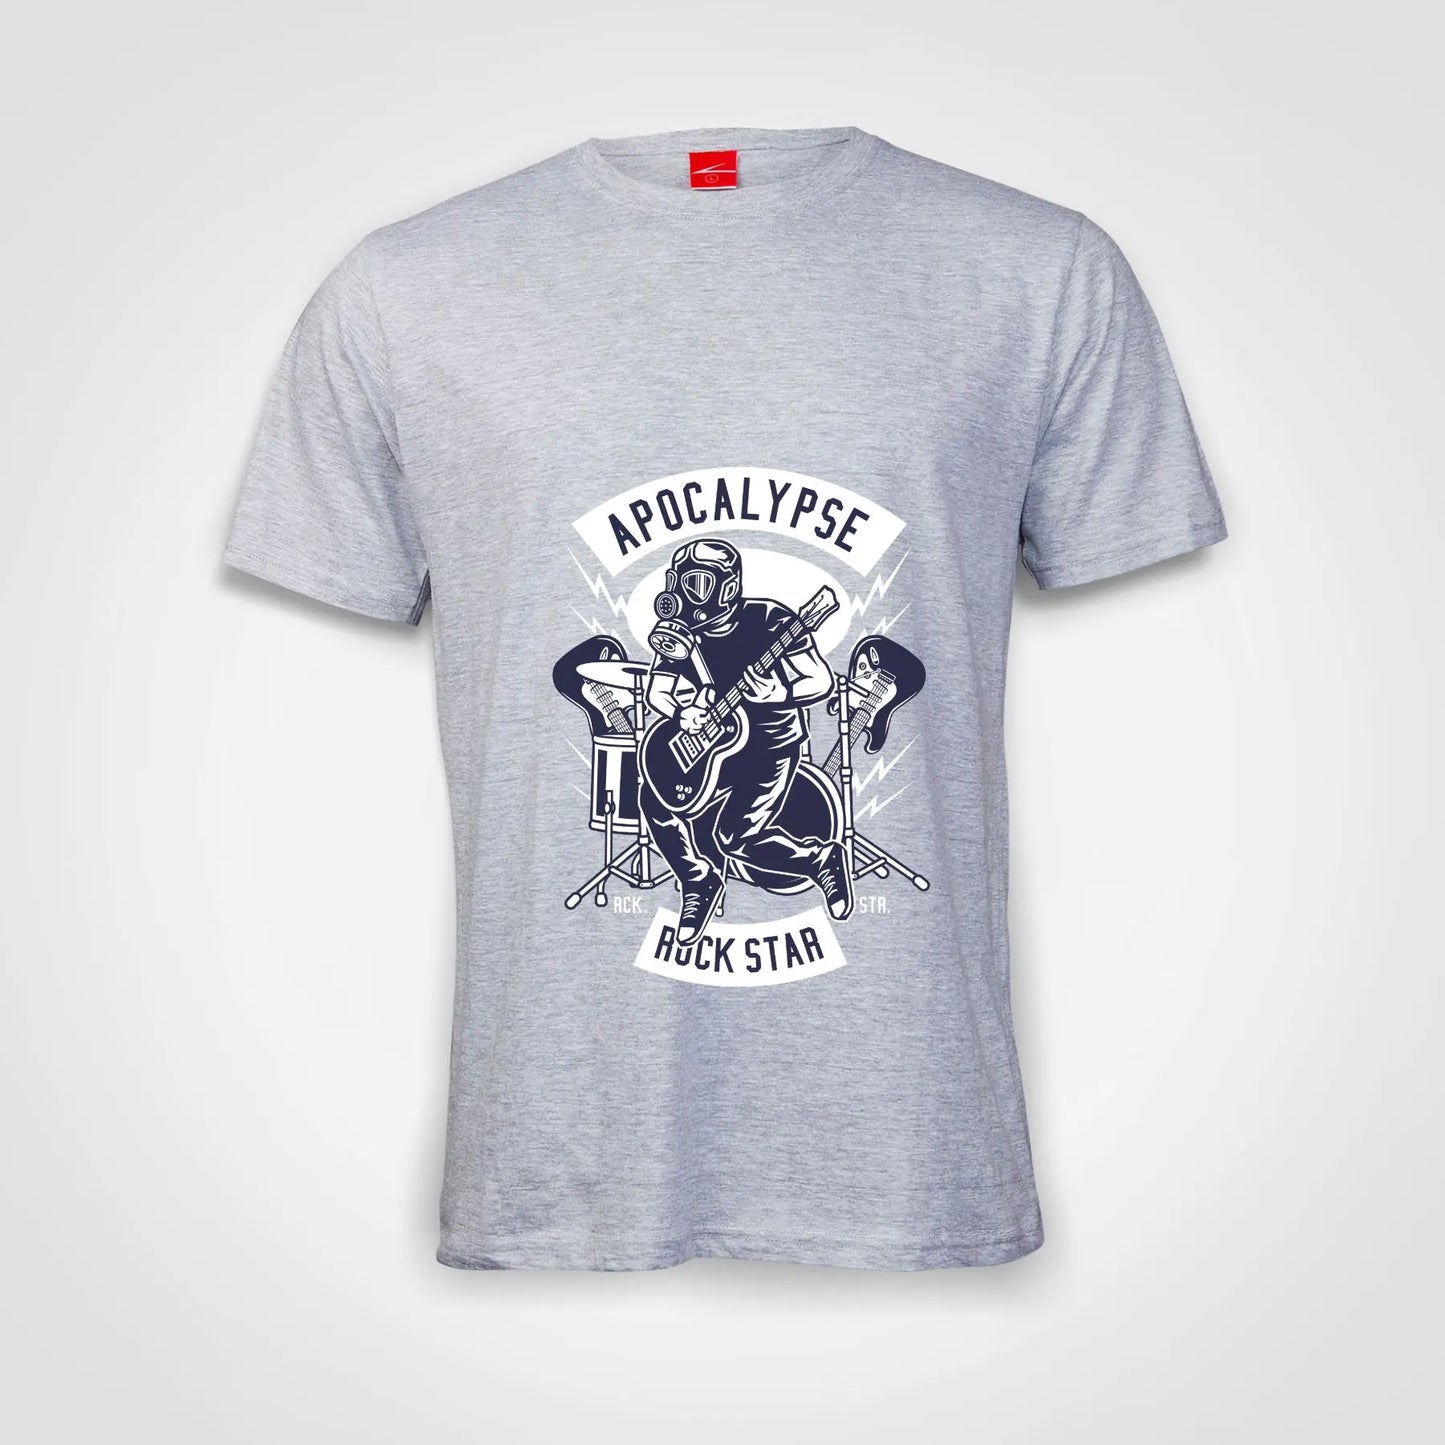 Apocalypse Rock Star Cotton T-Shirt Grey-Melange IZZIT APPAREL